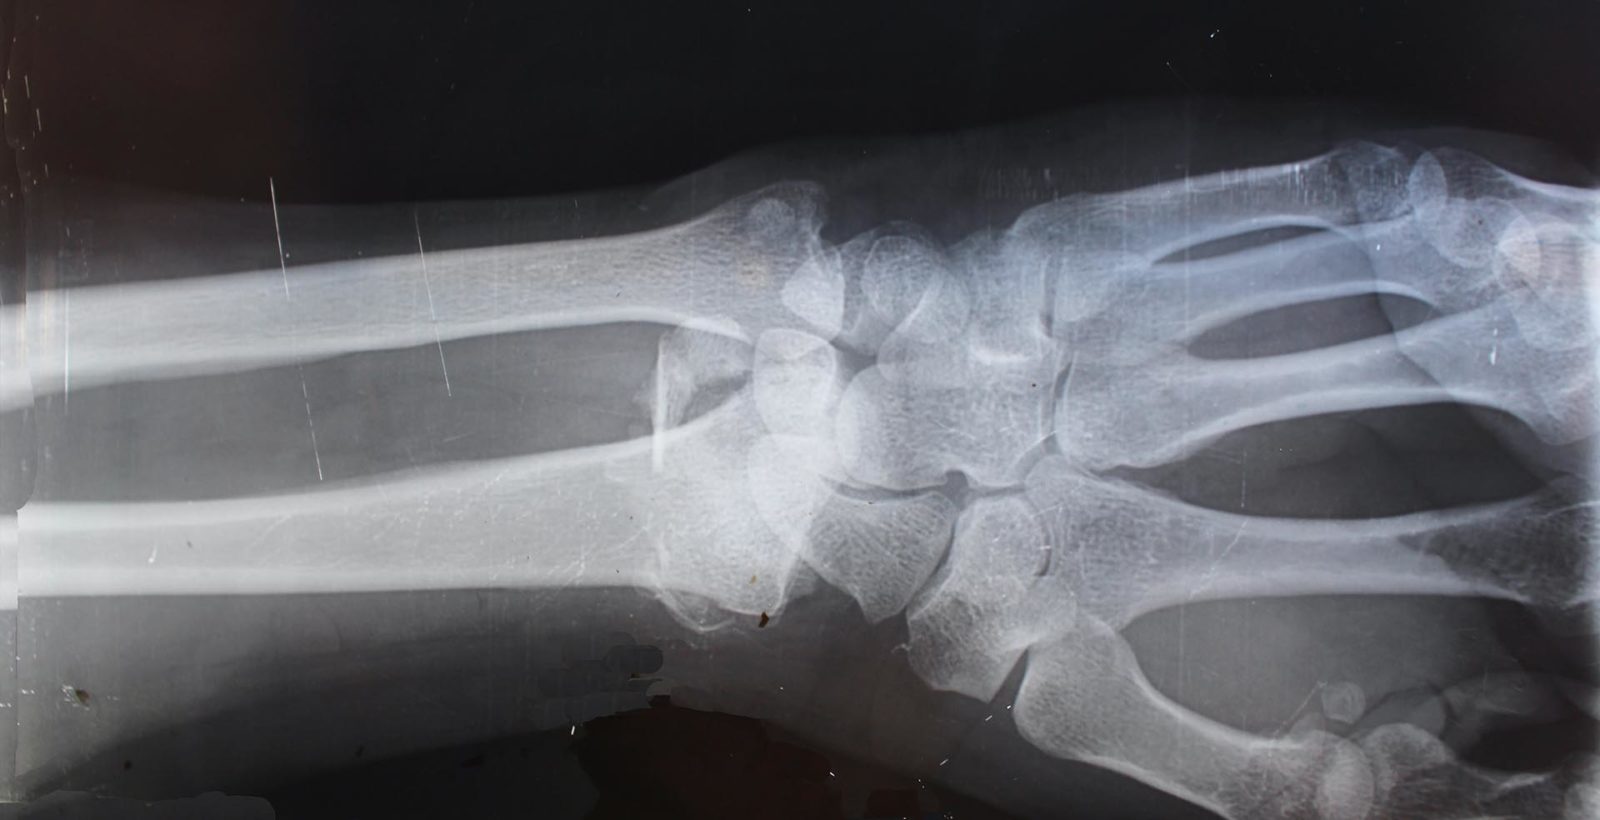 x-ray of a human wrist